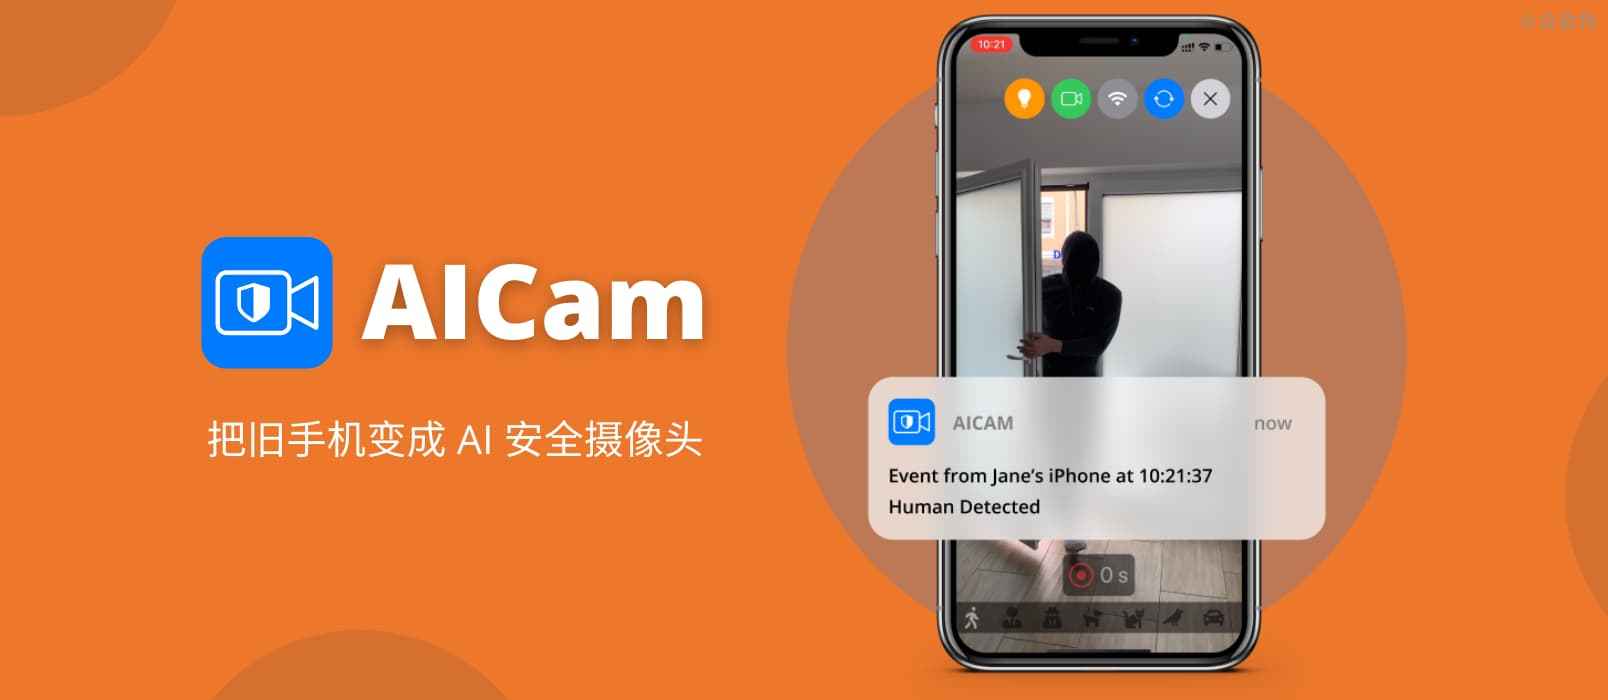 AiCam – AI 智能监控，用旧 iPhone 实现人脸检测、宠物识别（猫、狗、鸟）、车辆识别